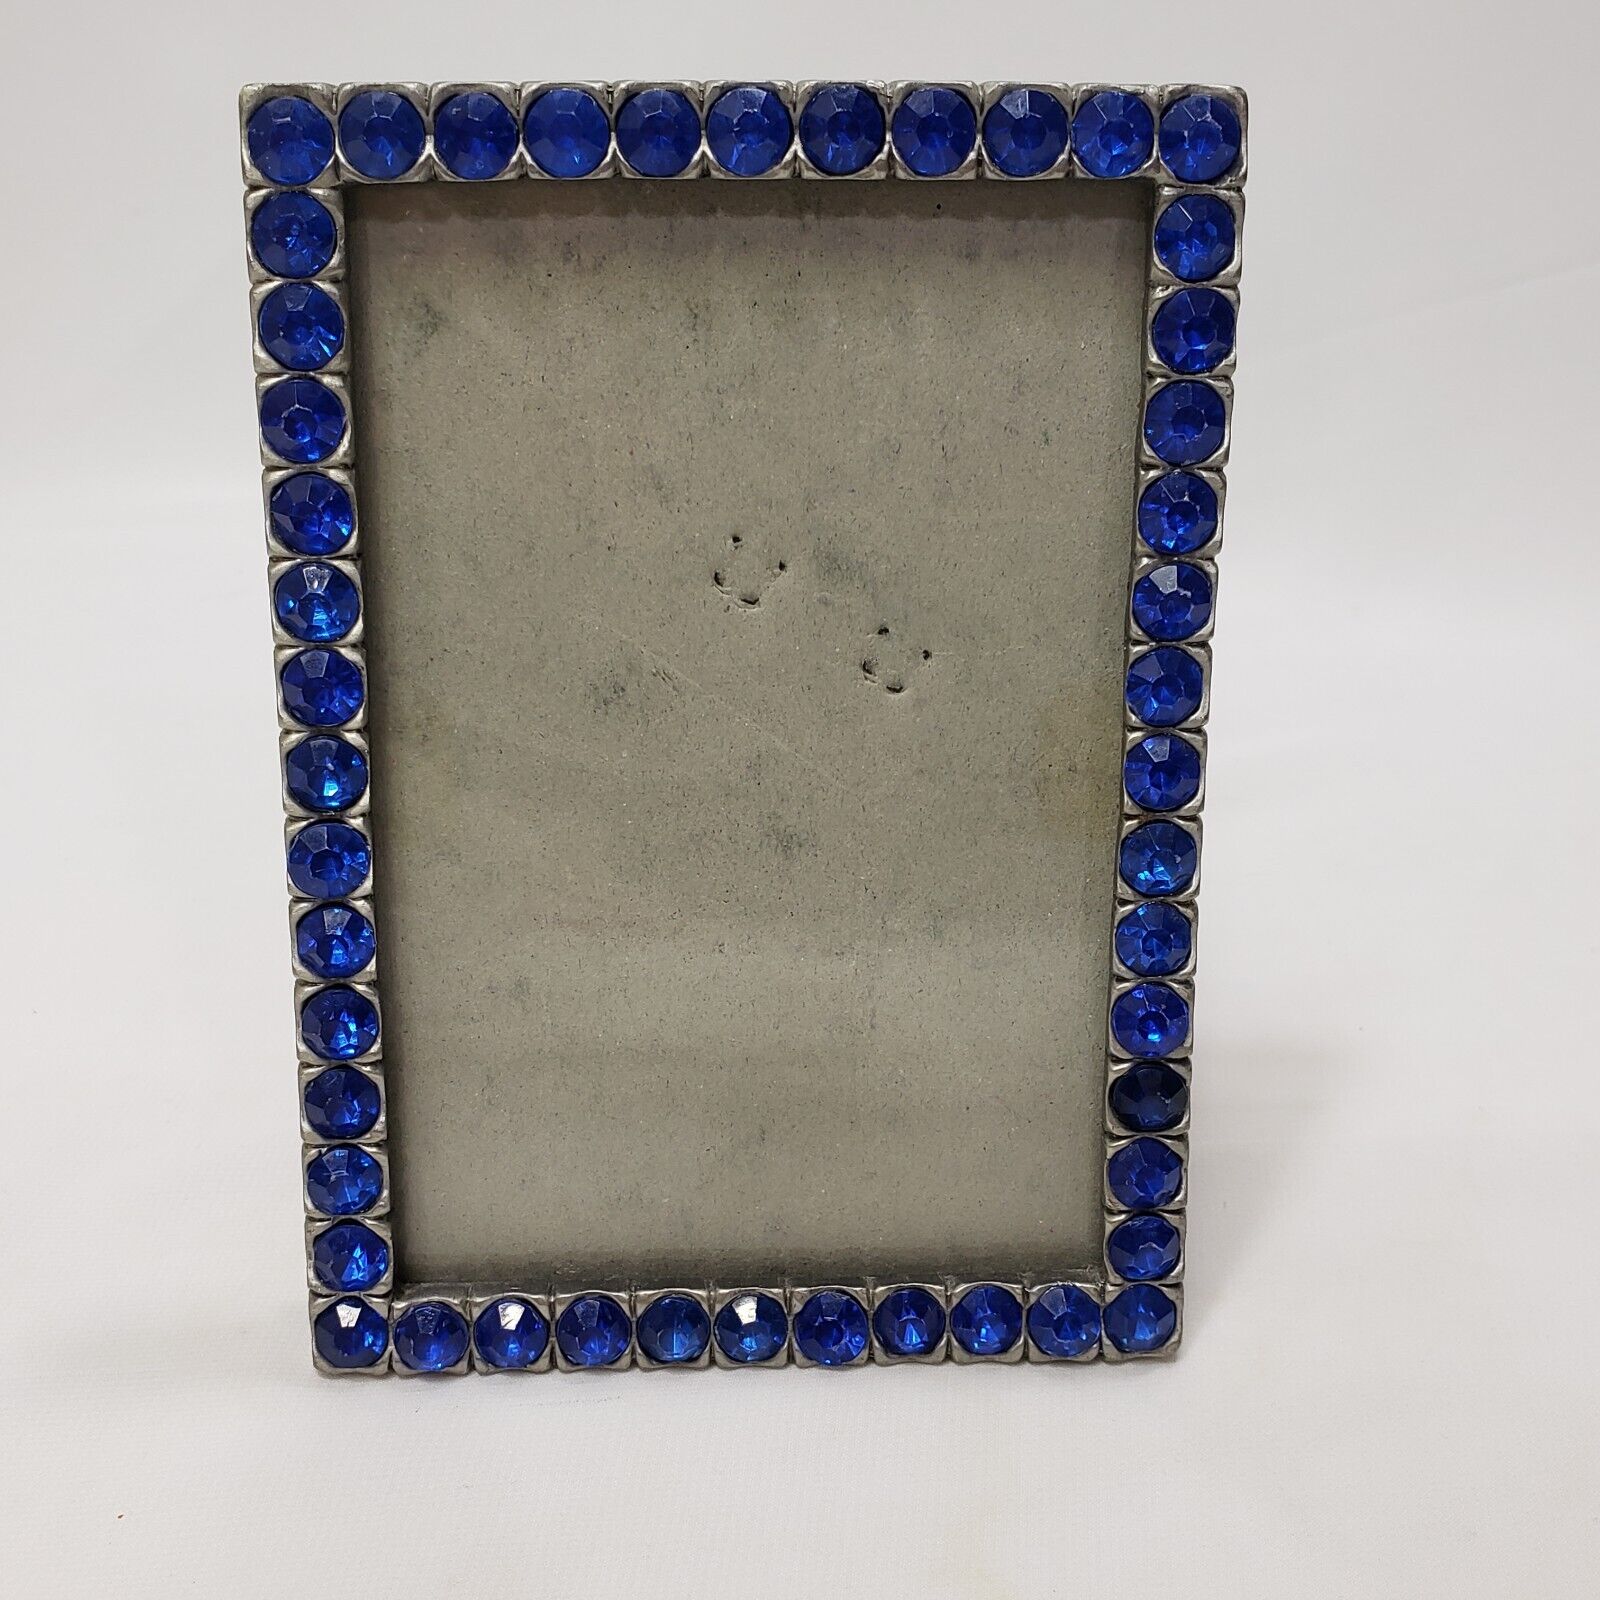 Vintage Picture Frame 3x5 Silver Border Blue Glass Beads Ornate MCM Glam Decor